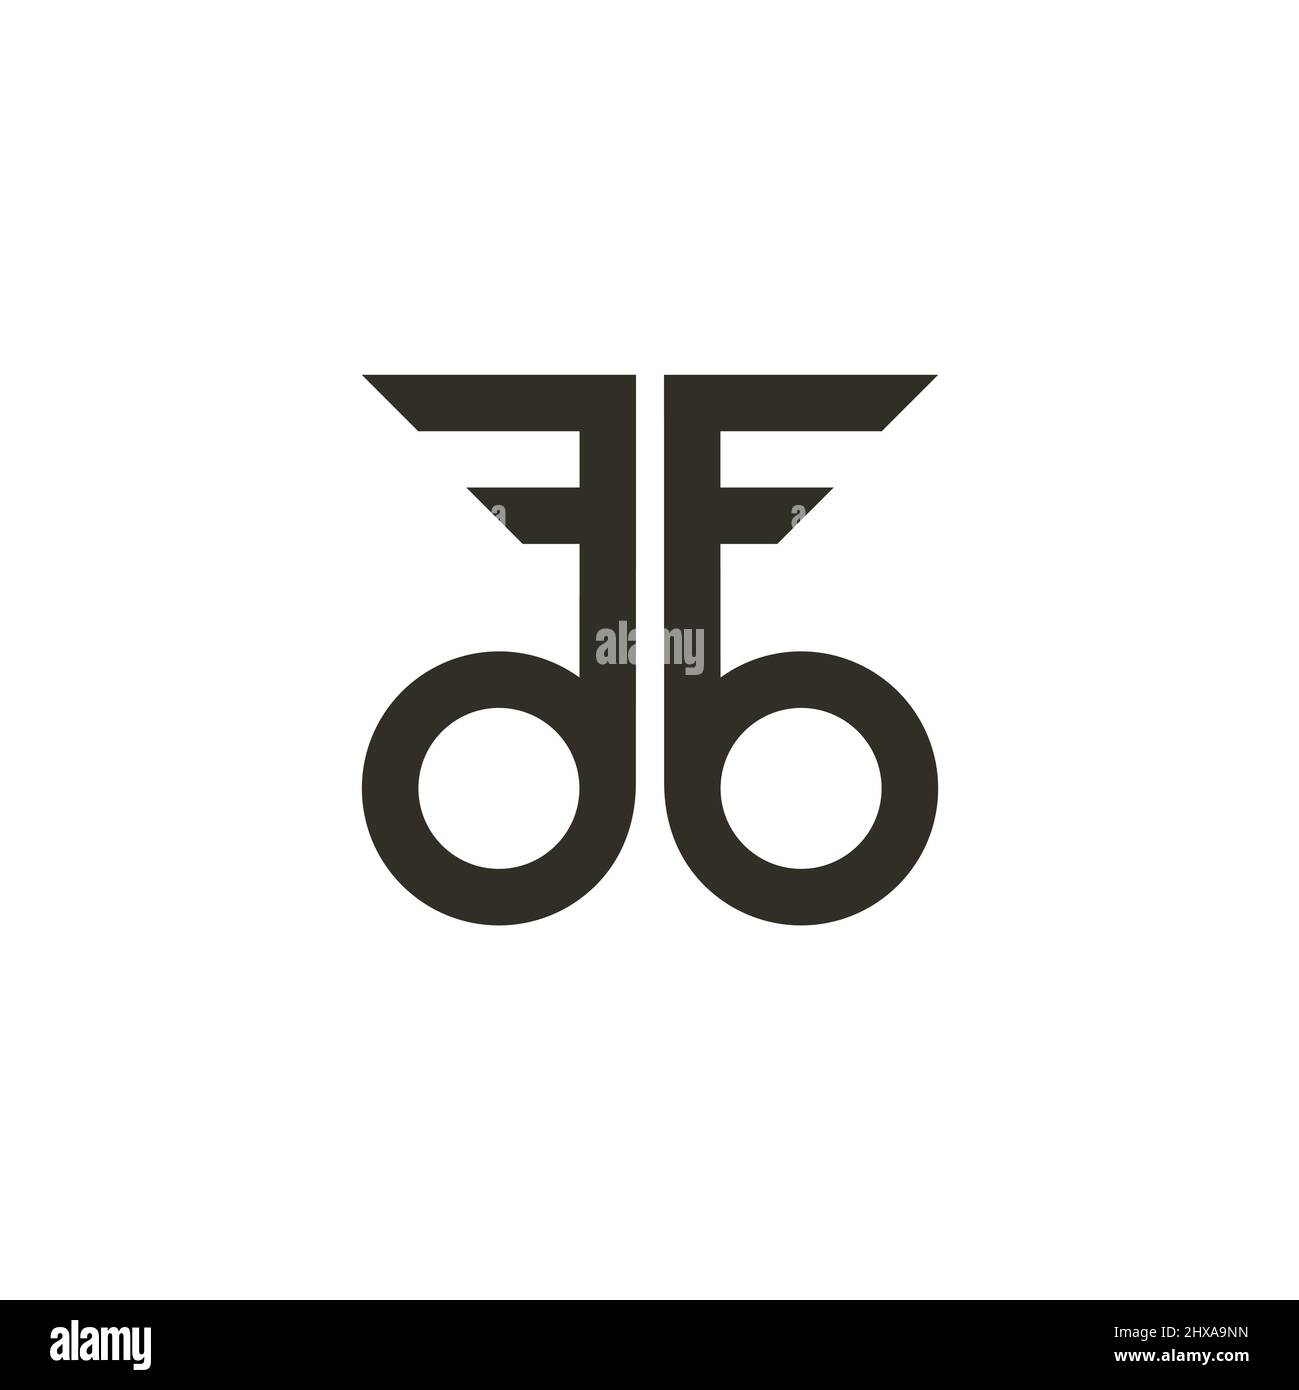 letter db key symbol simple symmetric logo vector Stock Vector